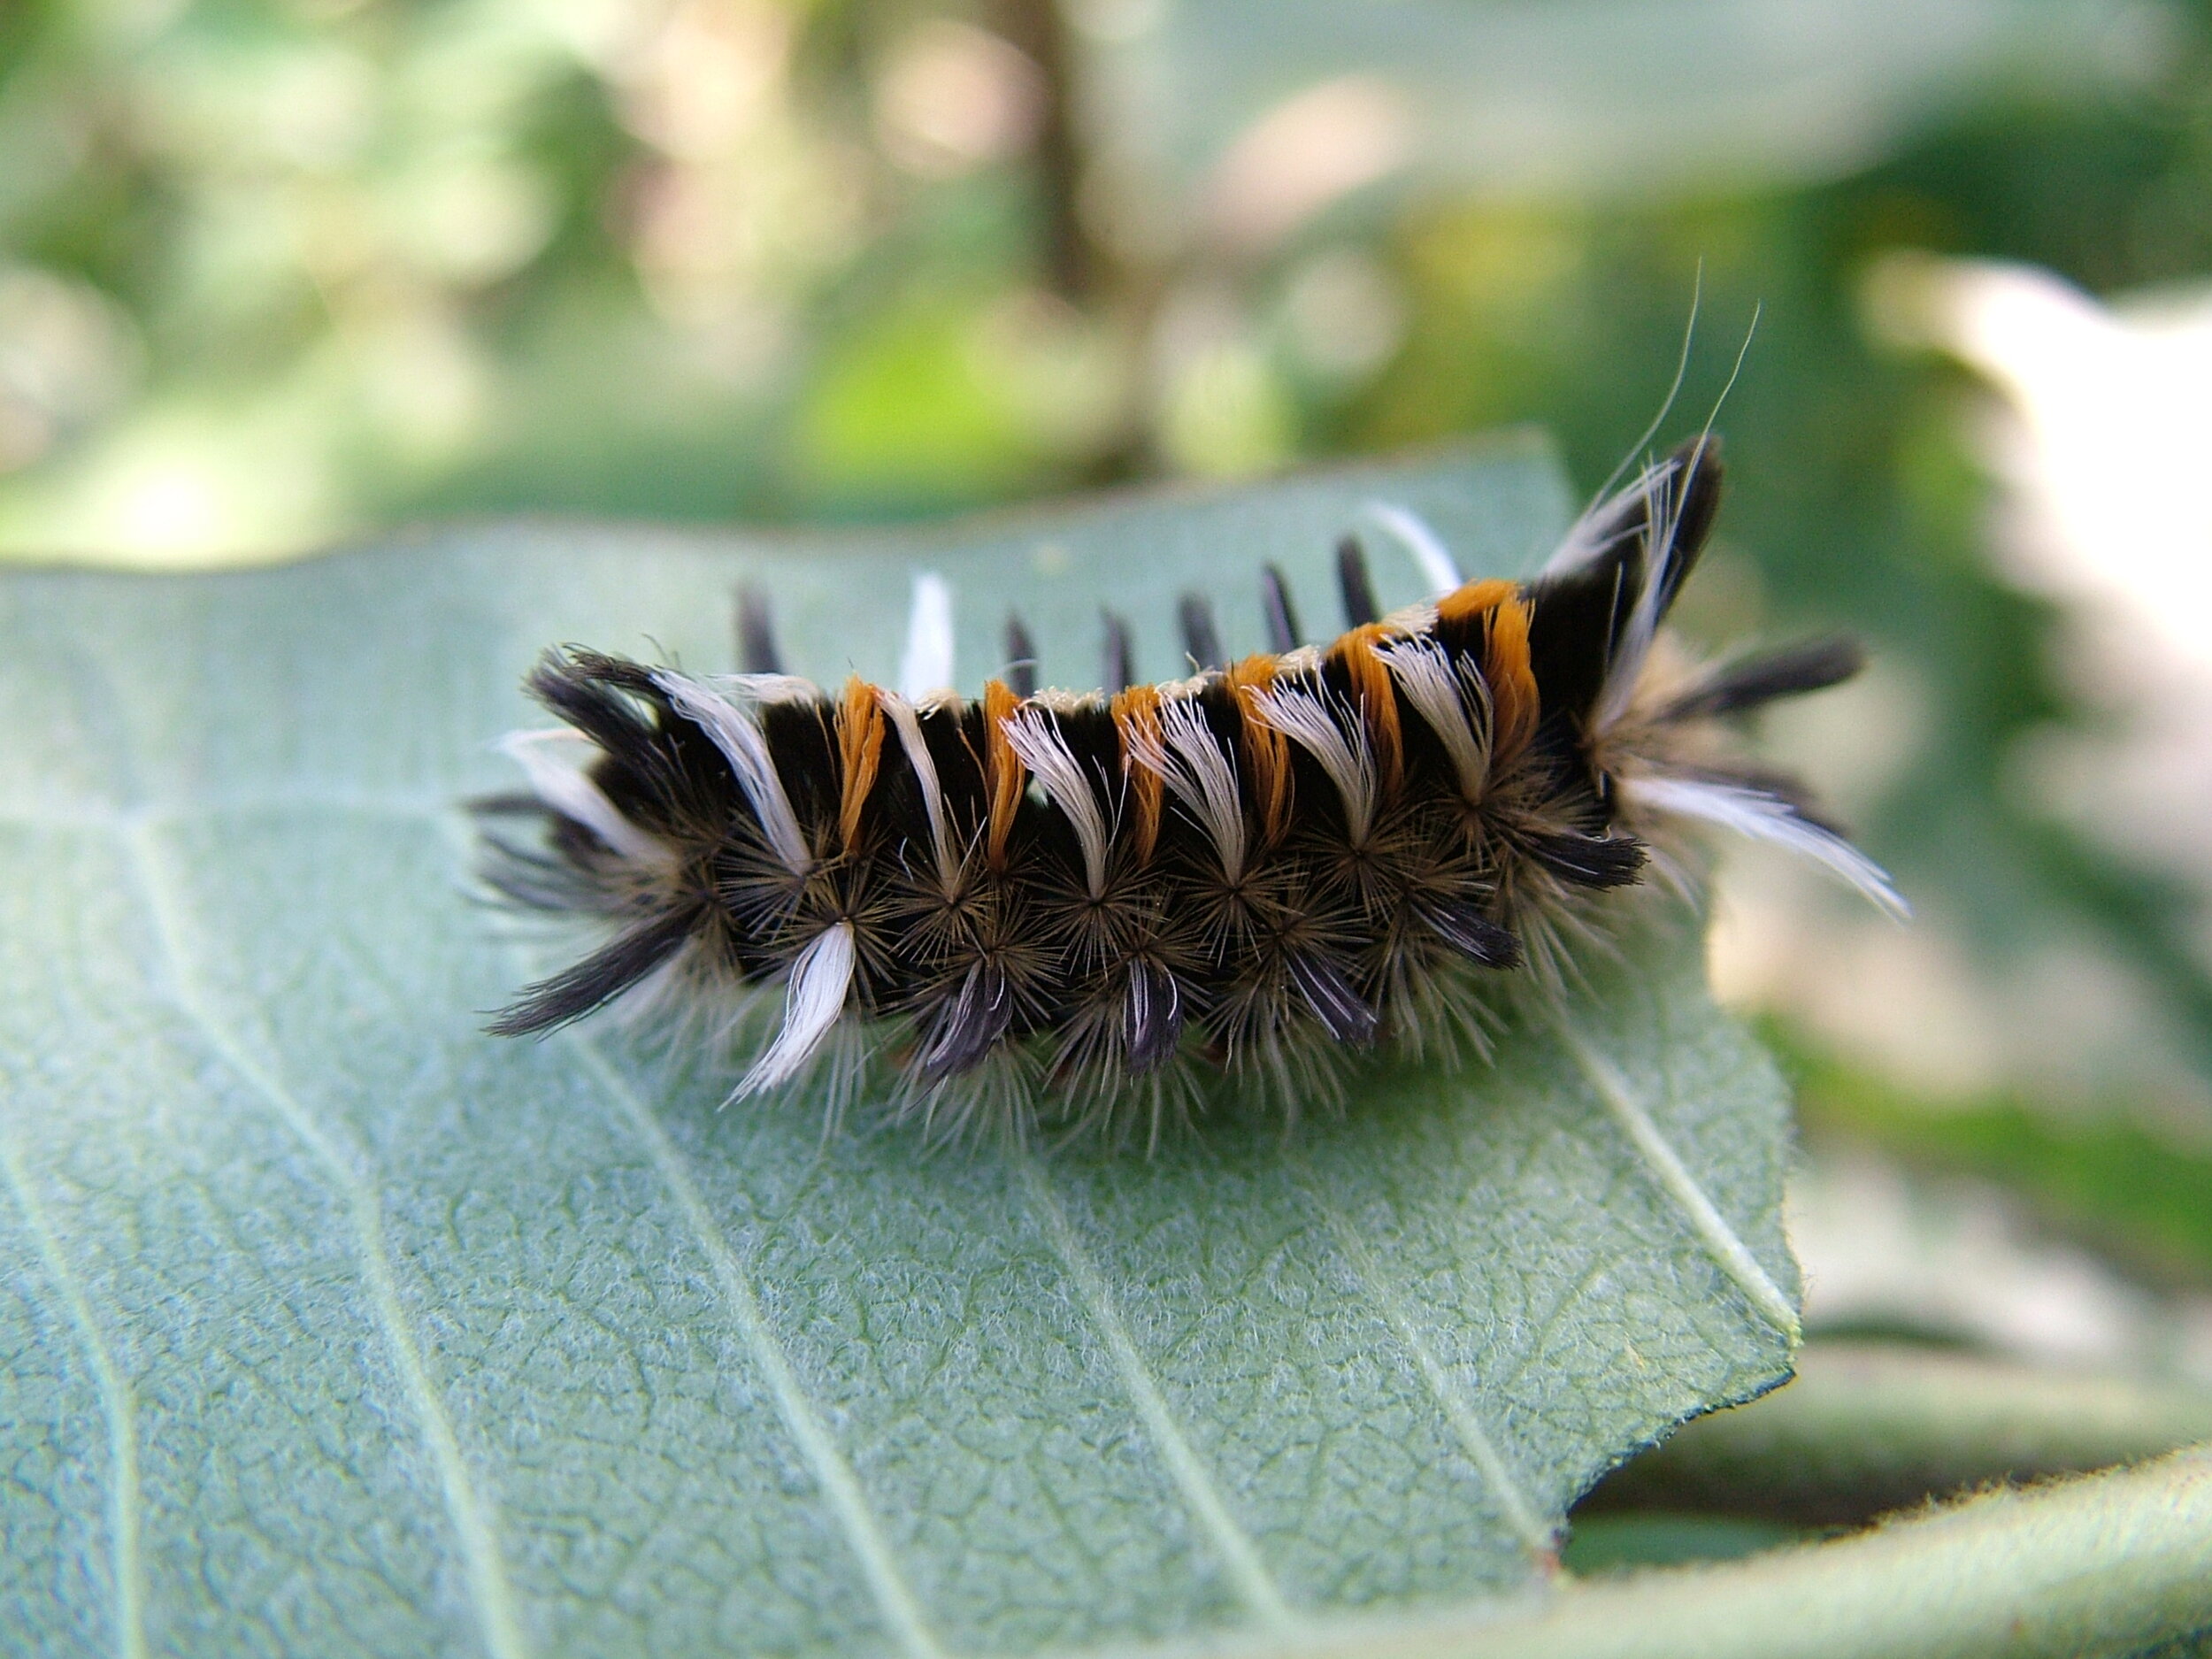 Milkweed tussock caterpillar photo by Jonathan Sutcliffe